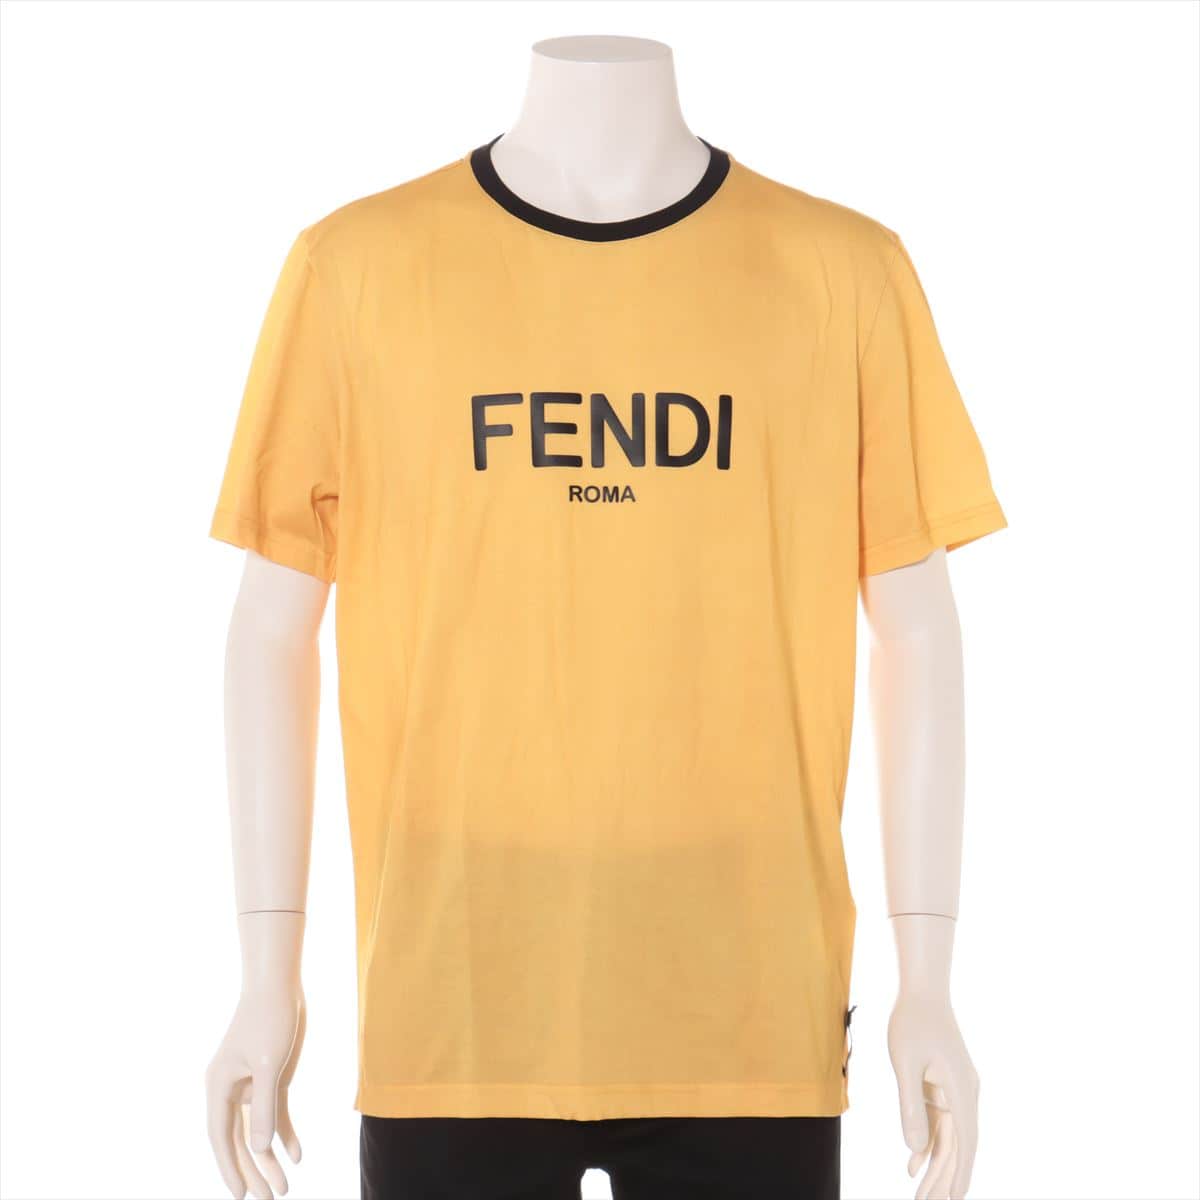 Fendi 20 years Cotton T-shirt XXL Men's Yellow